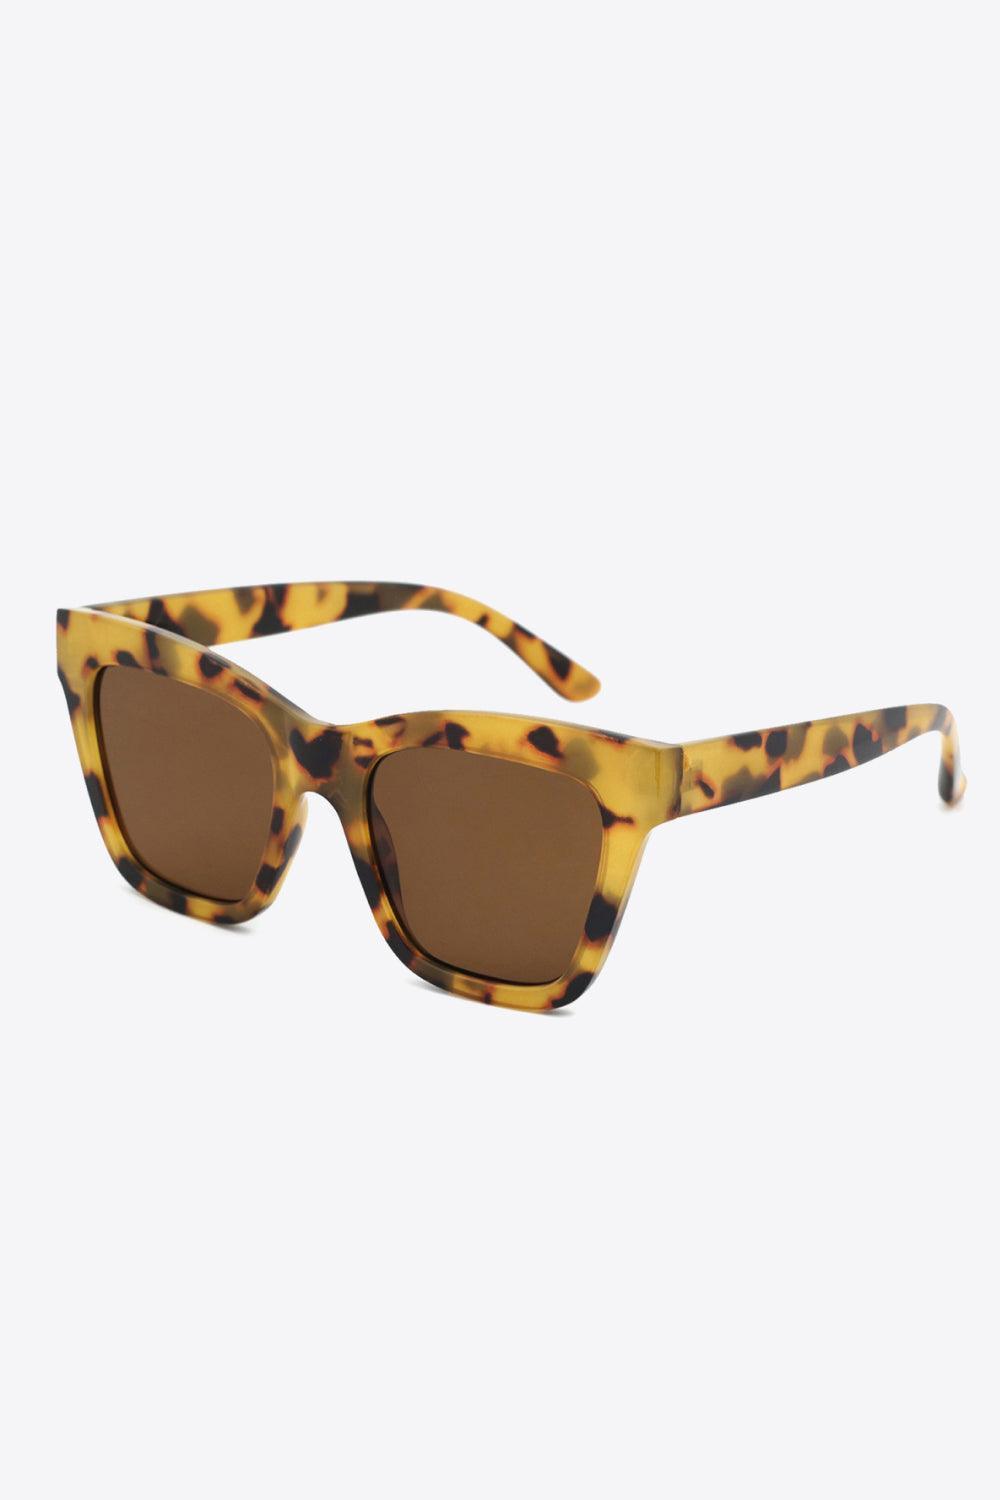 Wayfarer Acetate Lens Tortoiseshell Sunglasses - MXSTUDIO.COM